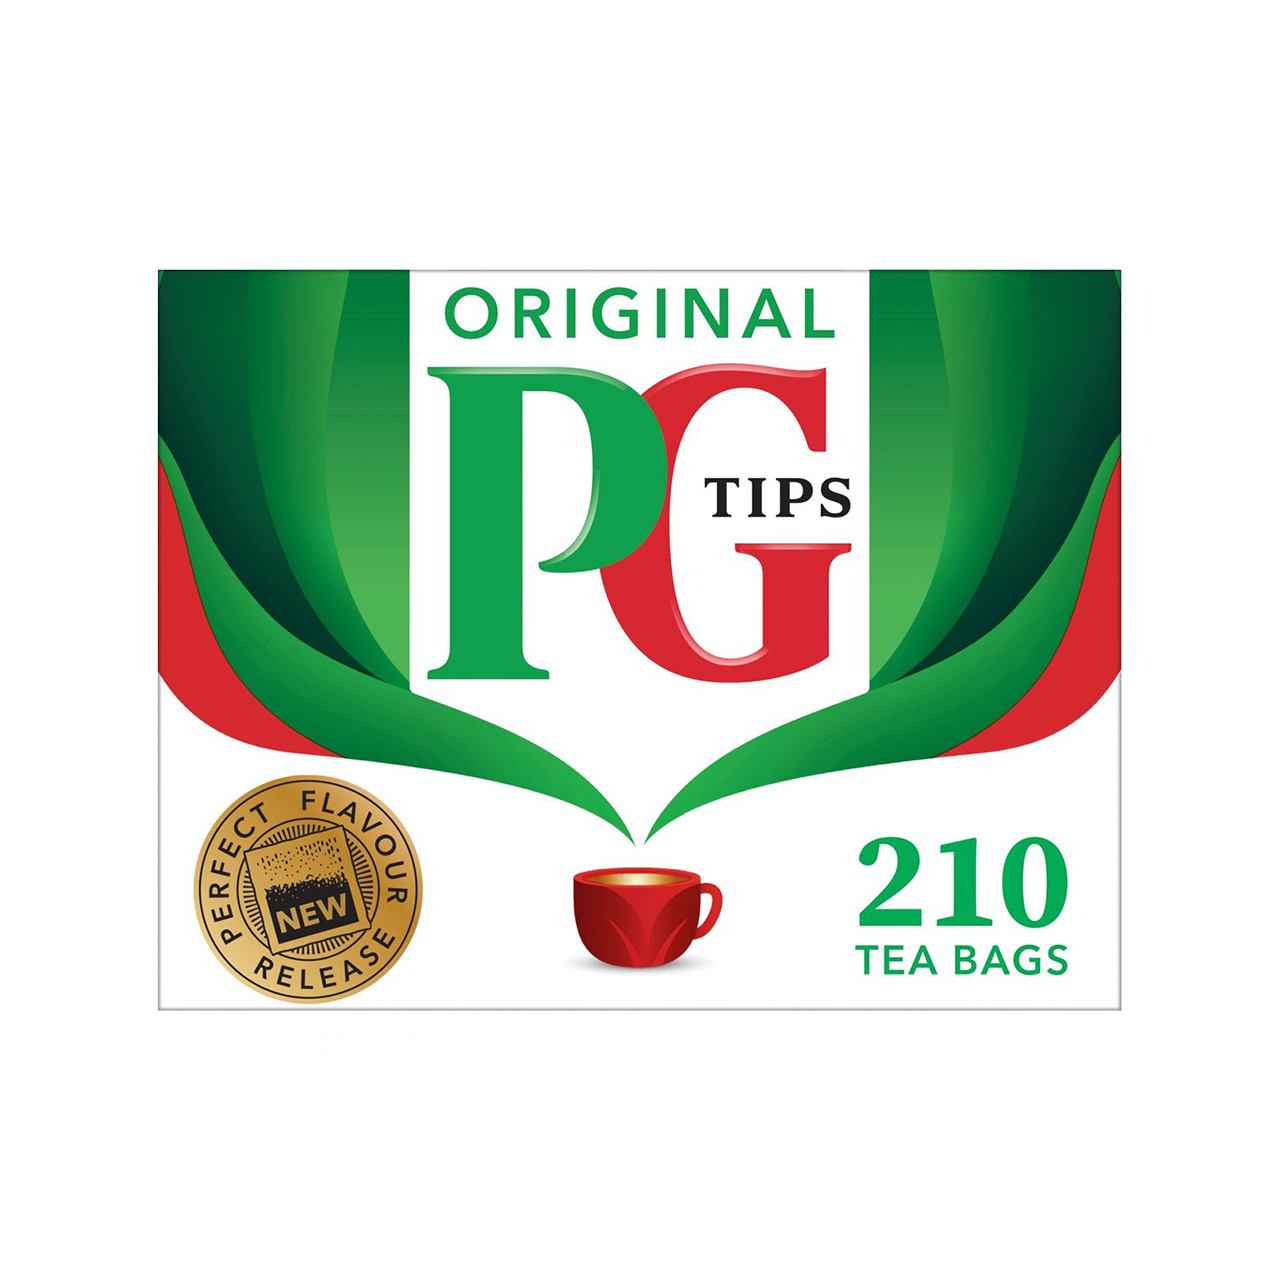 PG TIPS – Original Teabags Biodegradable – 210’s